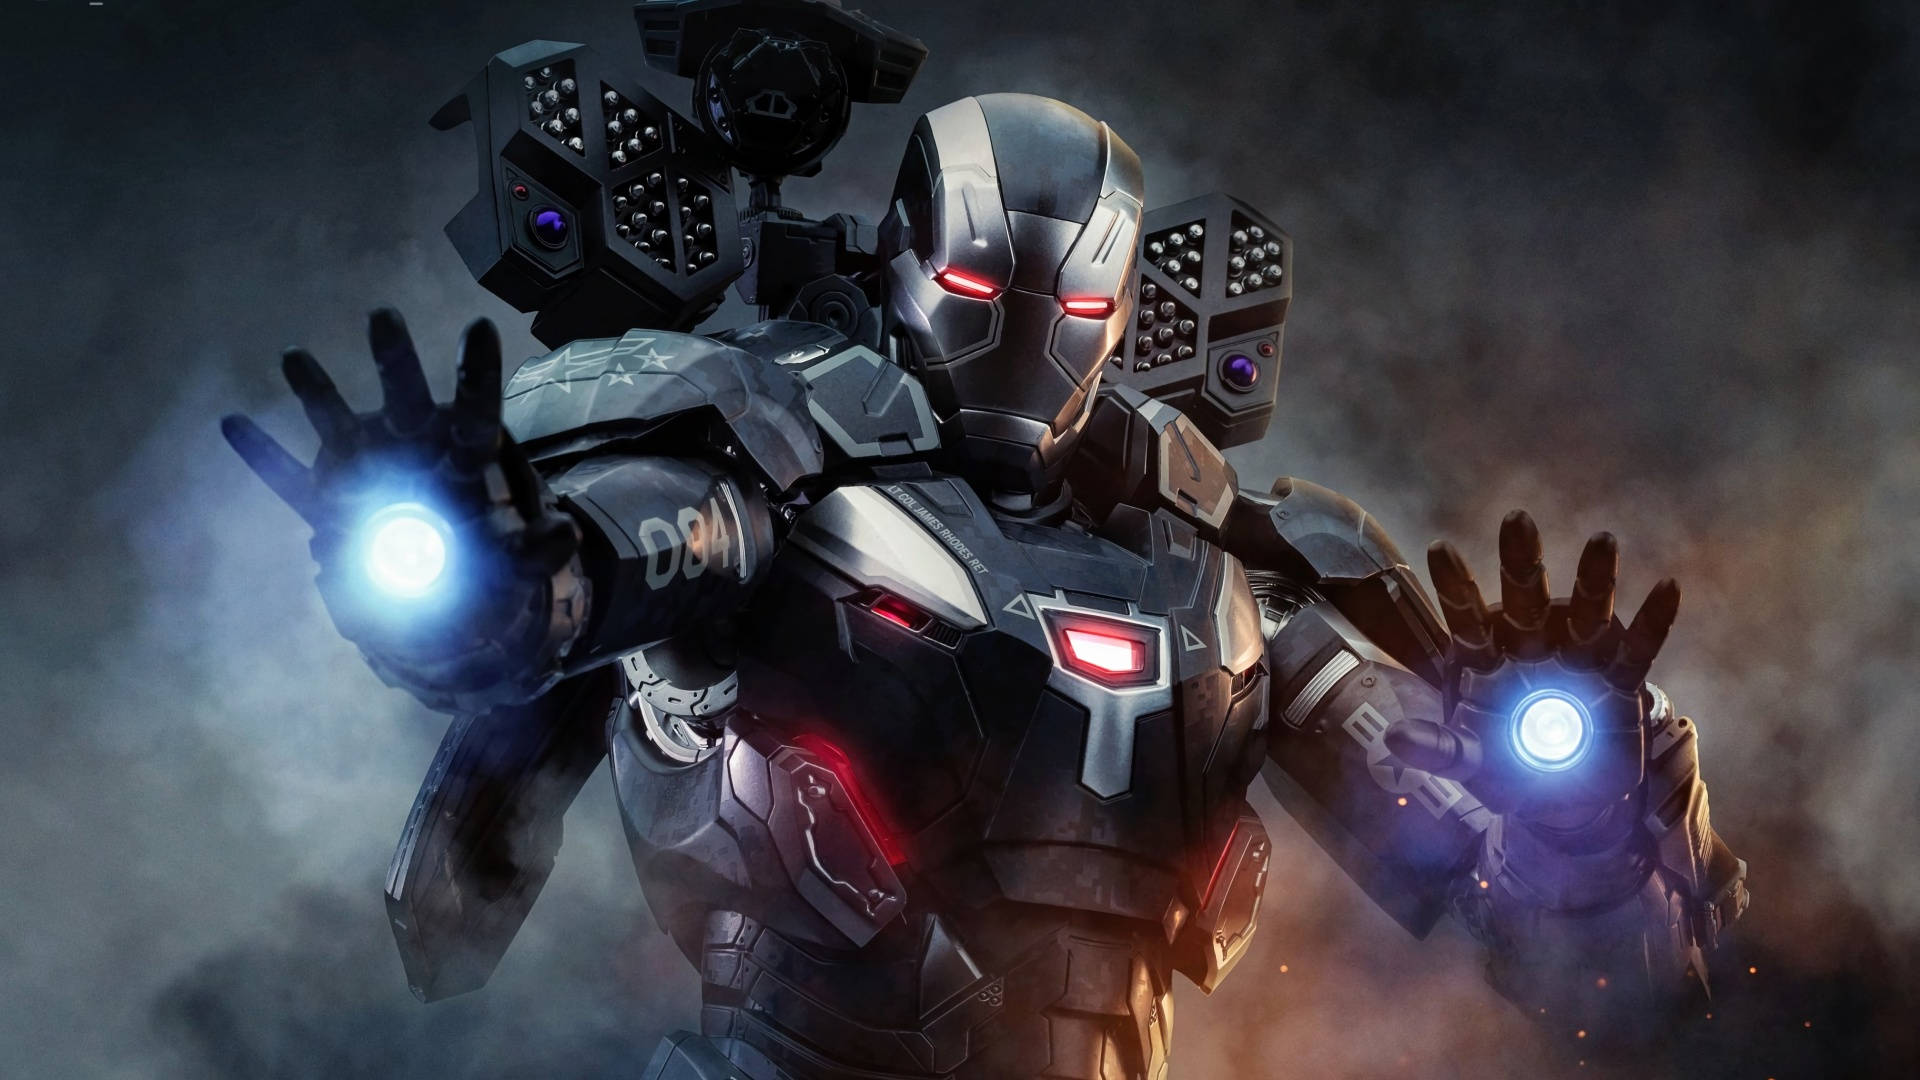 Black Iron Man Suit in Full HD Wallpaper